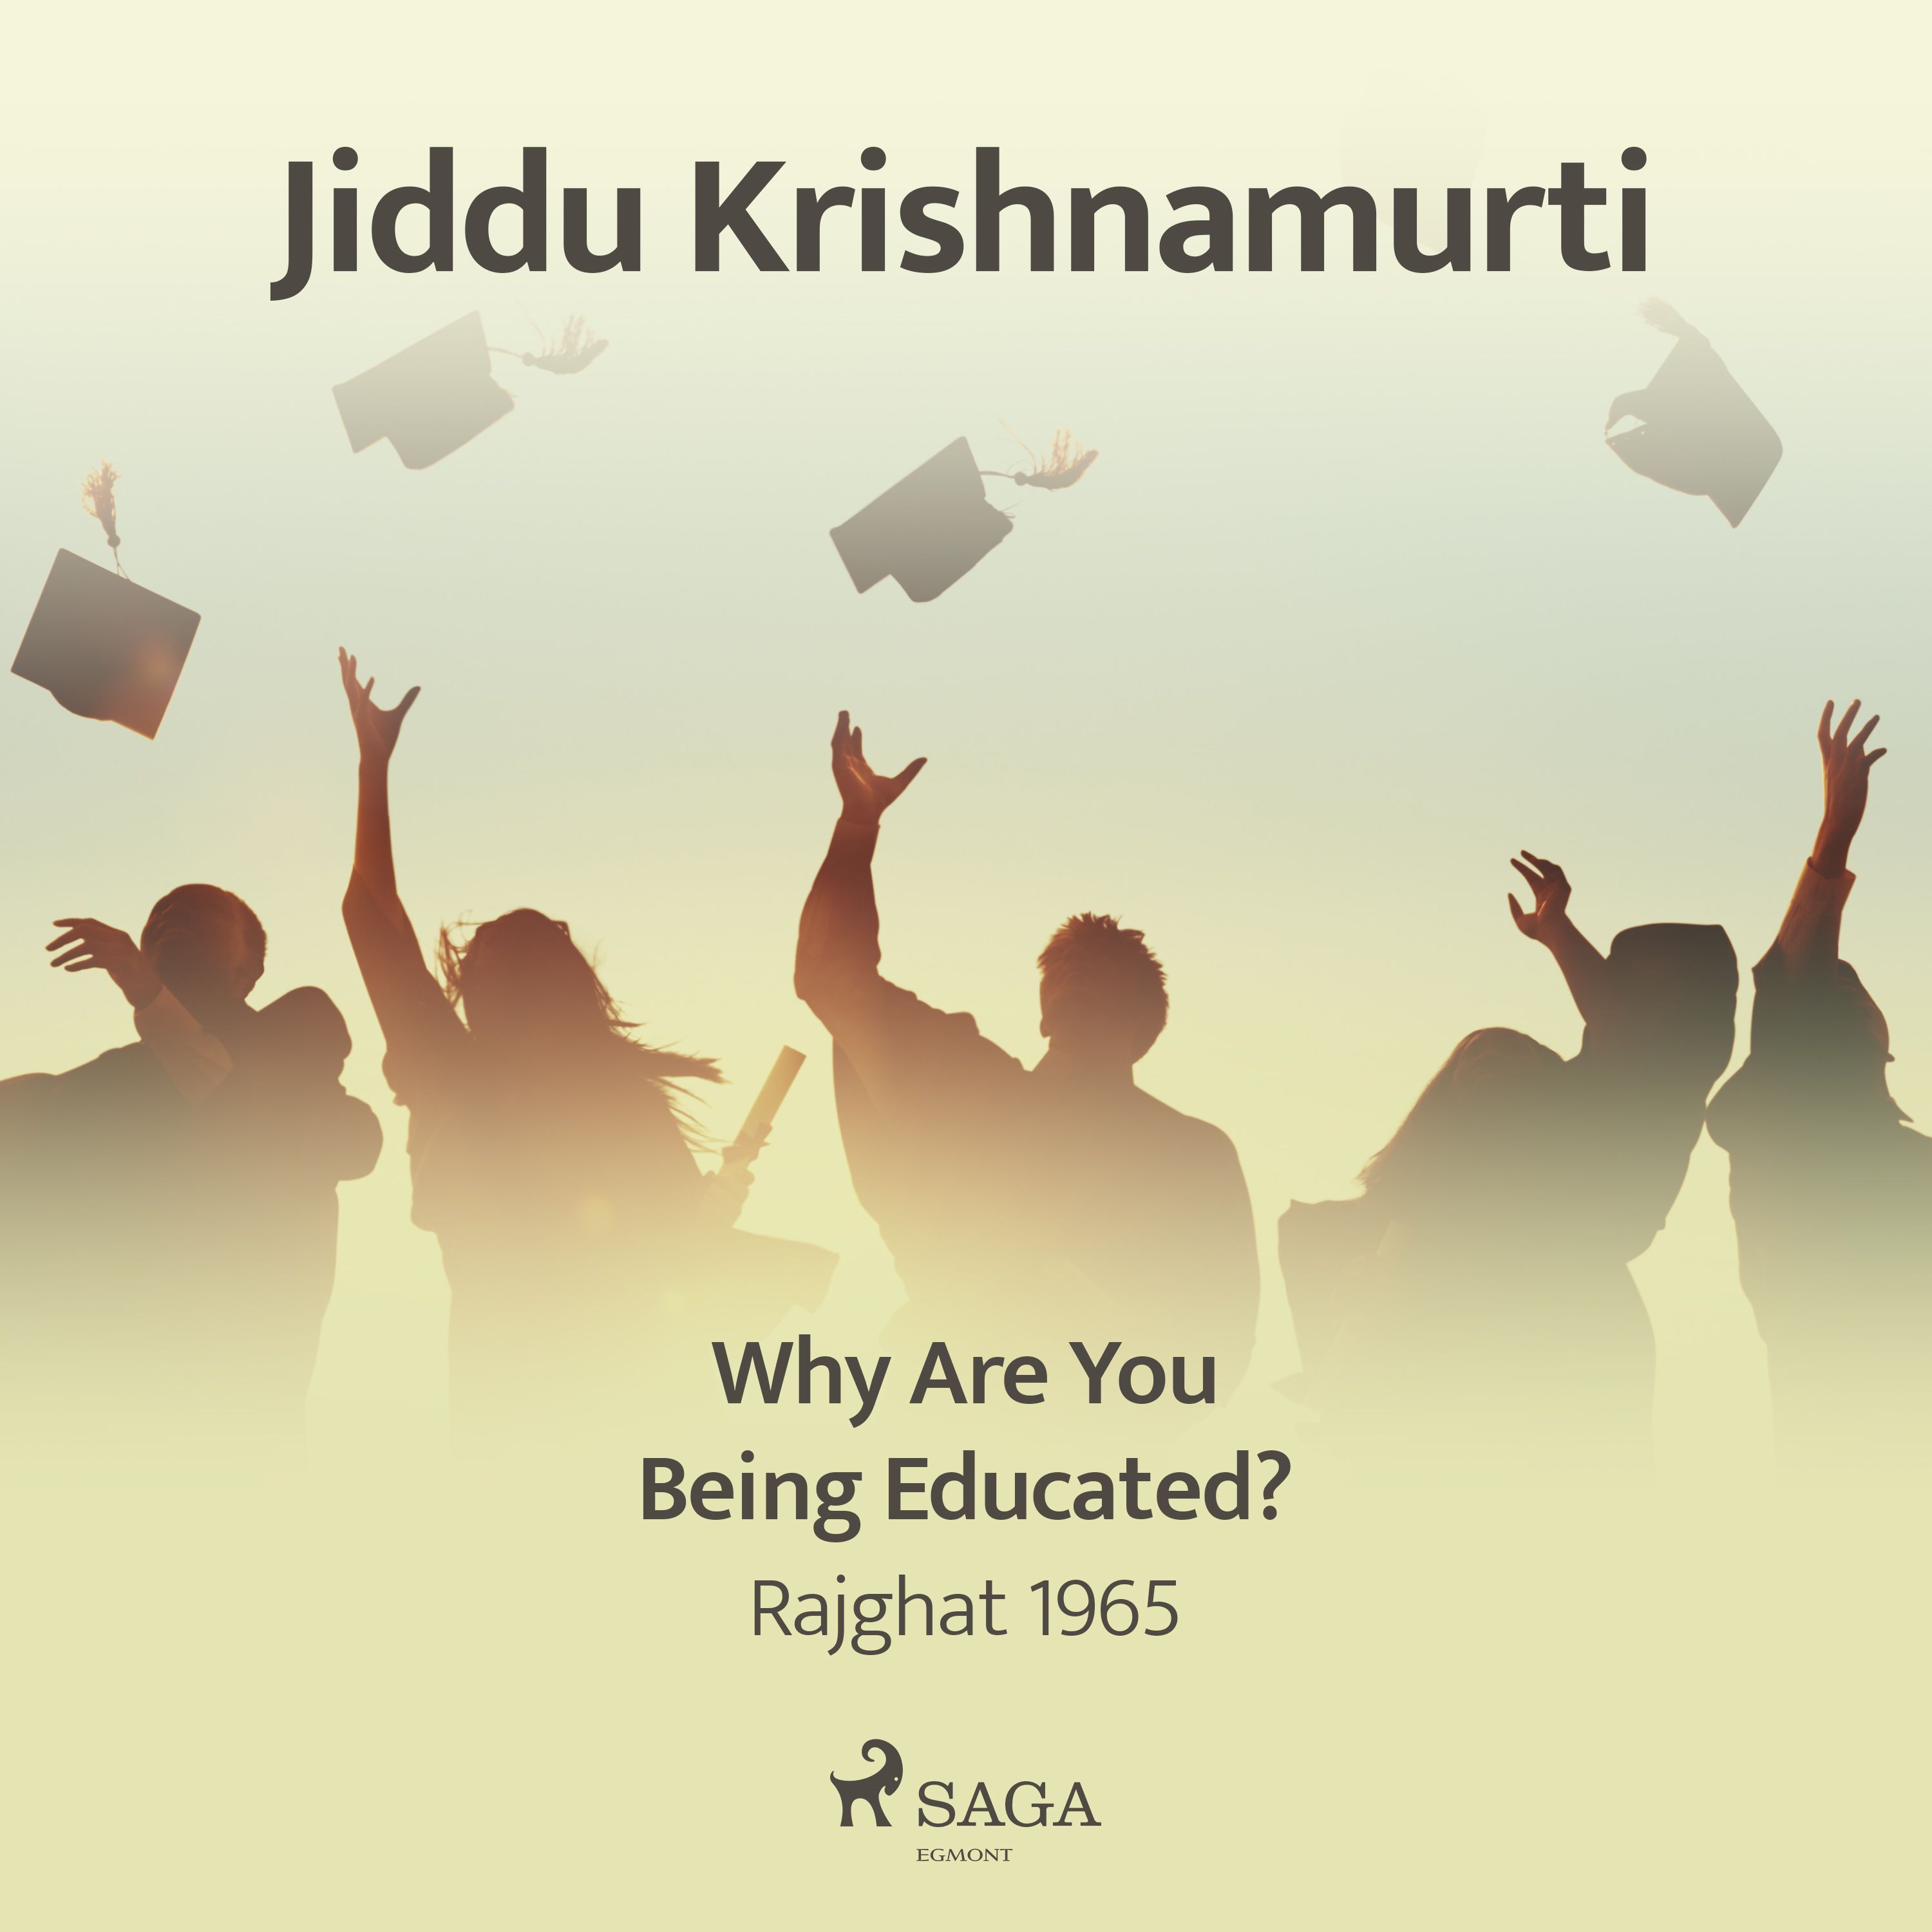 Why Are You Being Educated? – Rajghat 1965, ljudbok av Jiddu Krishnamurti